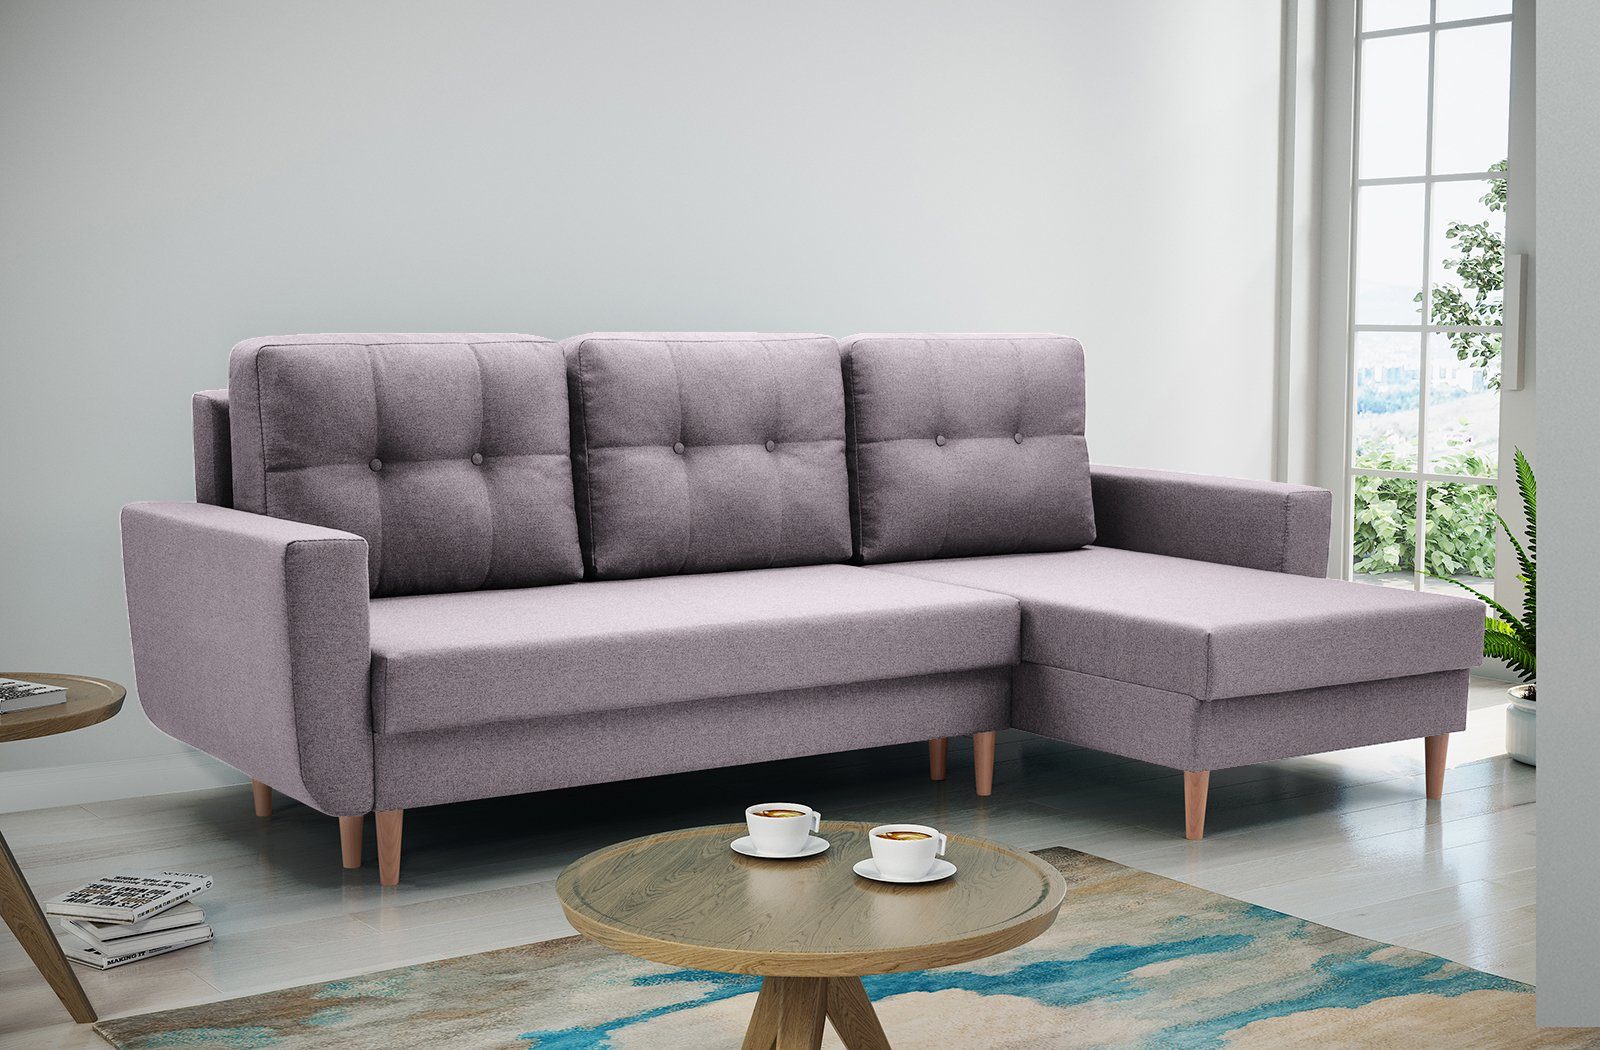 Beautysofa Polsterecke Couch Sofa Ecksofa ONLY, mit Schlaffunktion, mit universelle mane Hellgrau (malmo new 90)